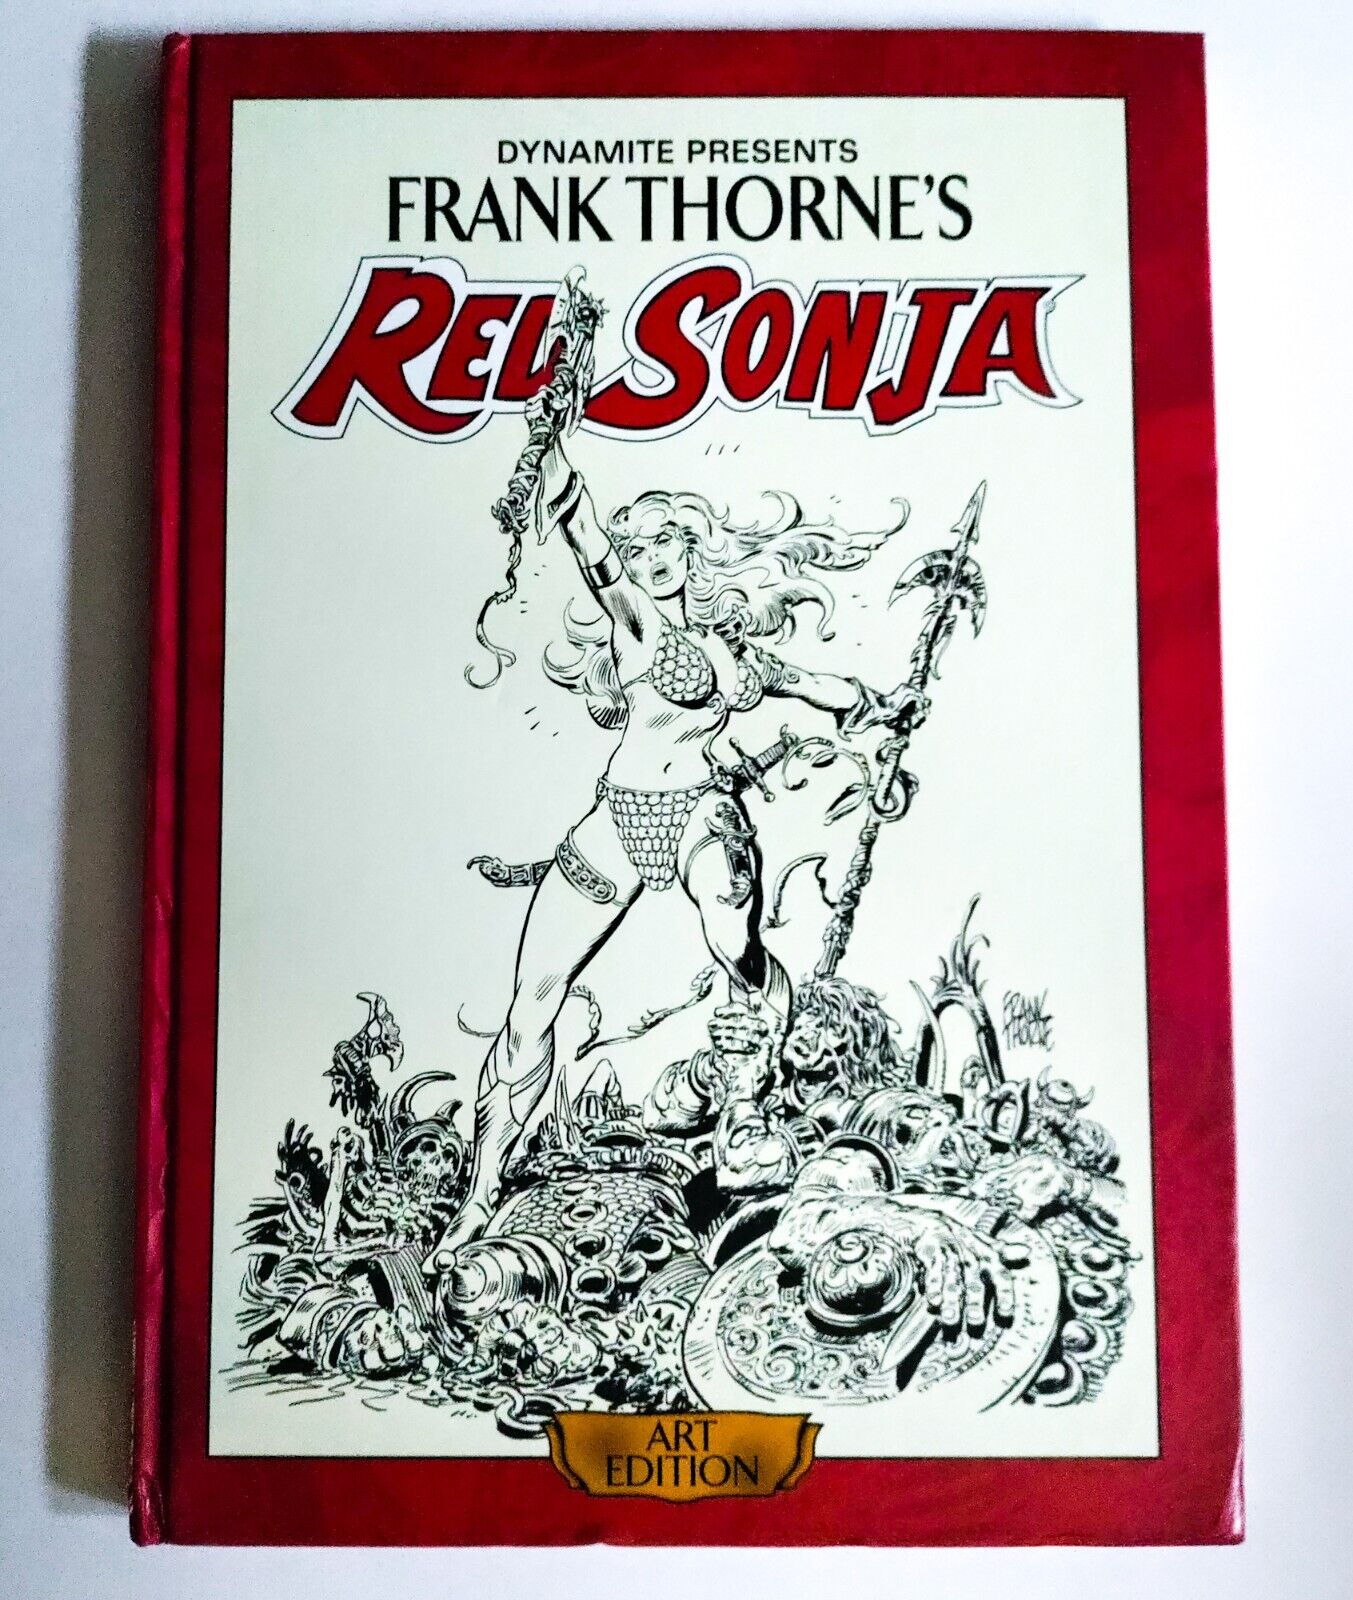 Red Sonja Art Edition Dynamite Volume 1 Frank Thorne Conan Marvel Comics Damaged